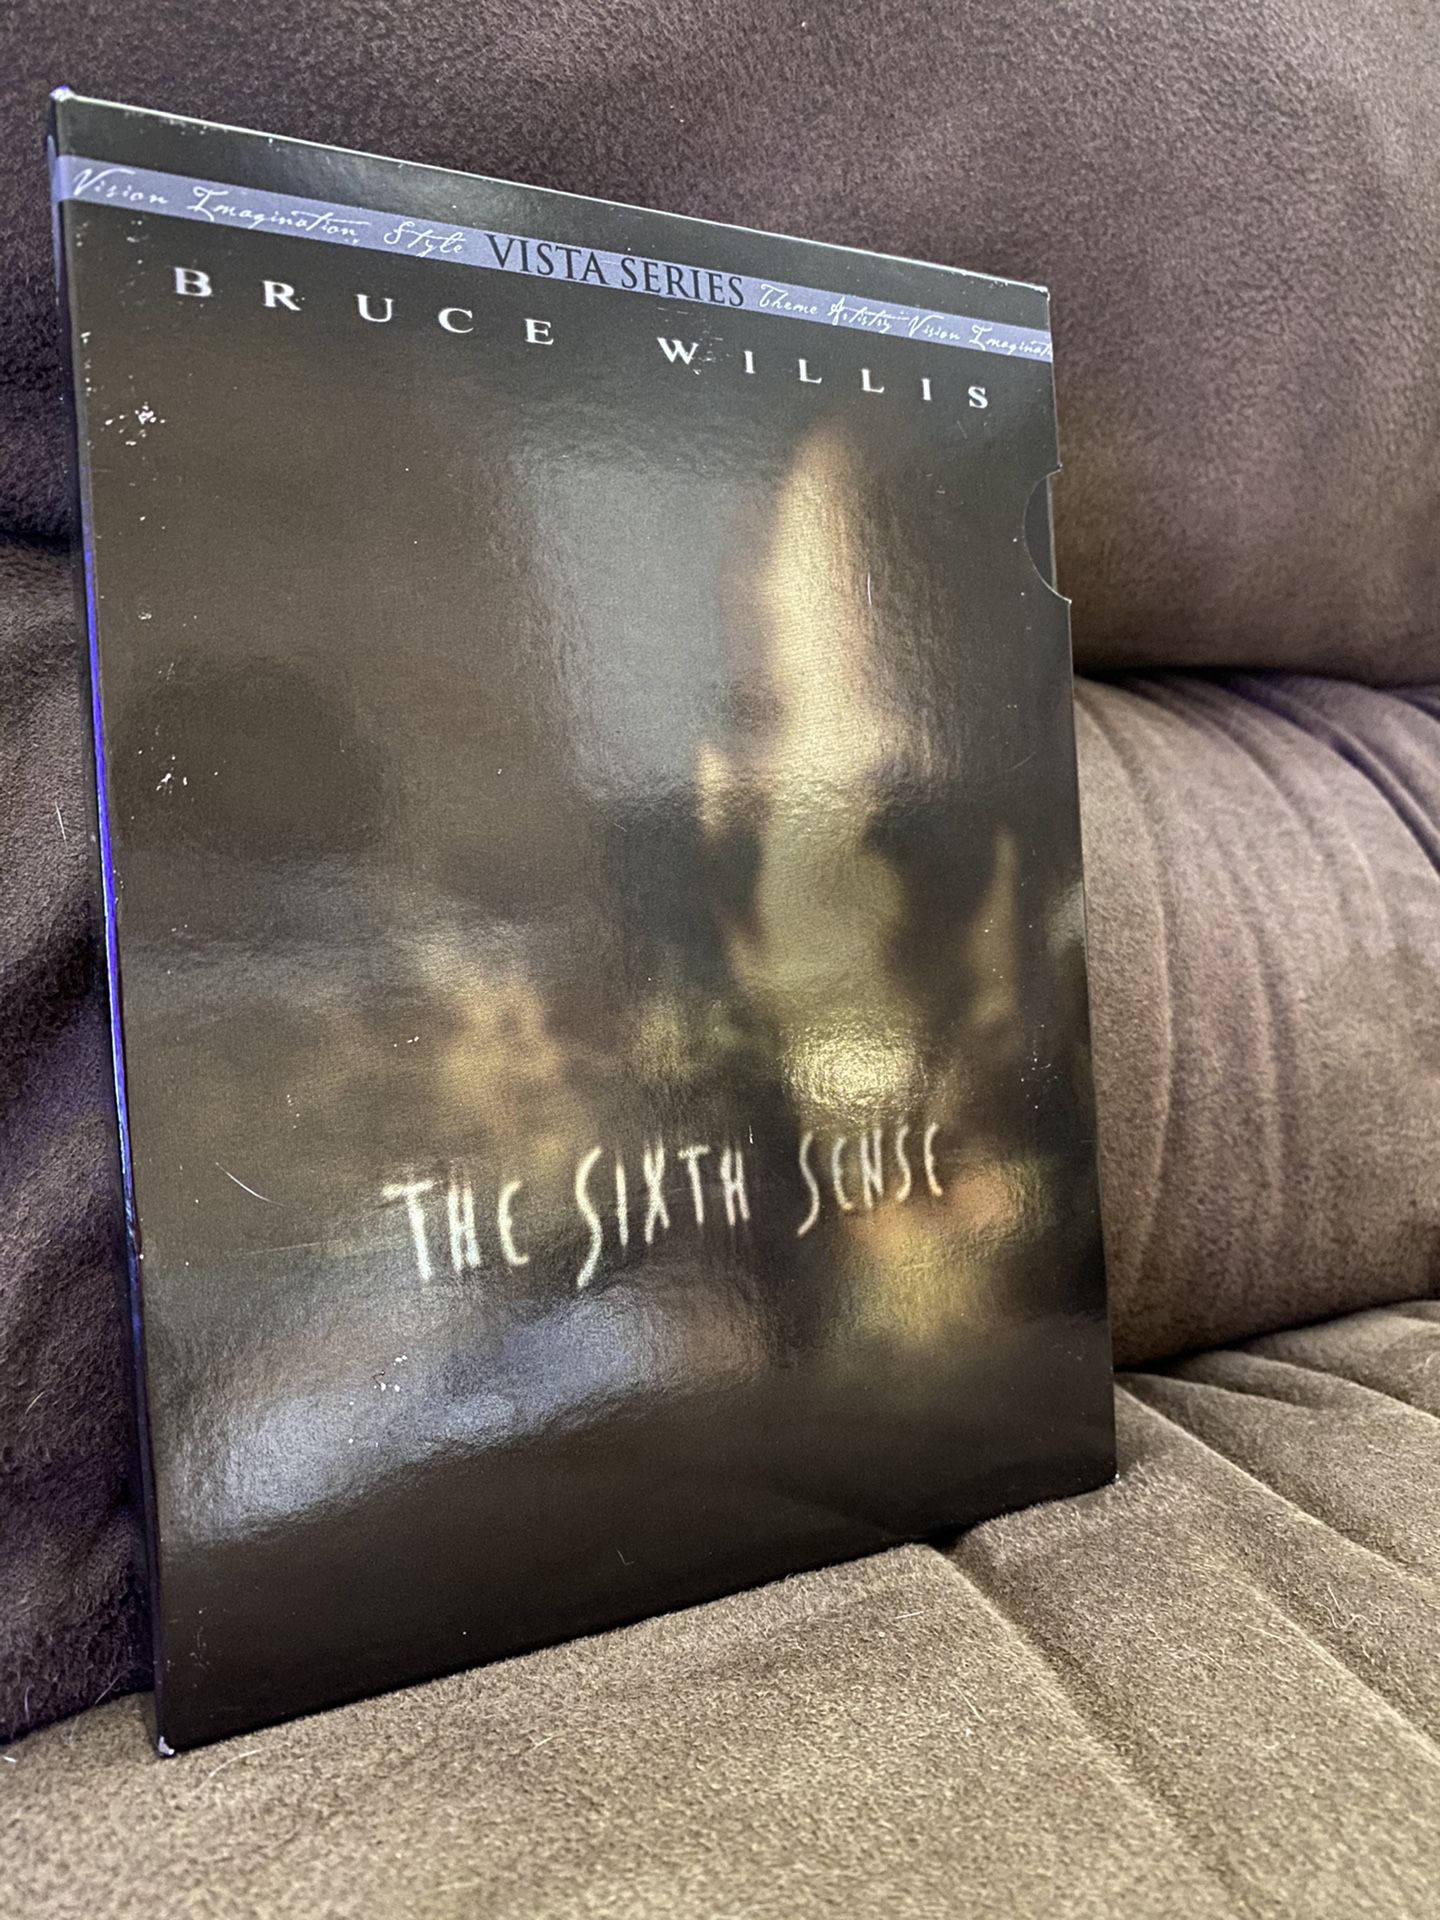 The Sixth Sense DVD Vista Series